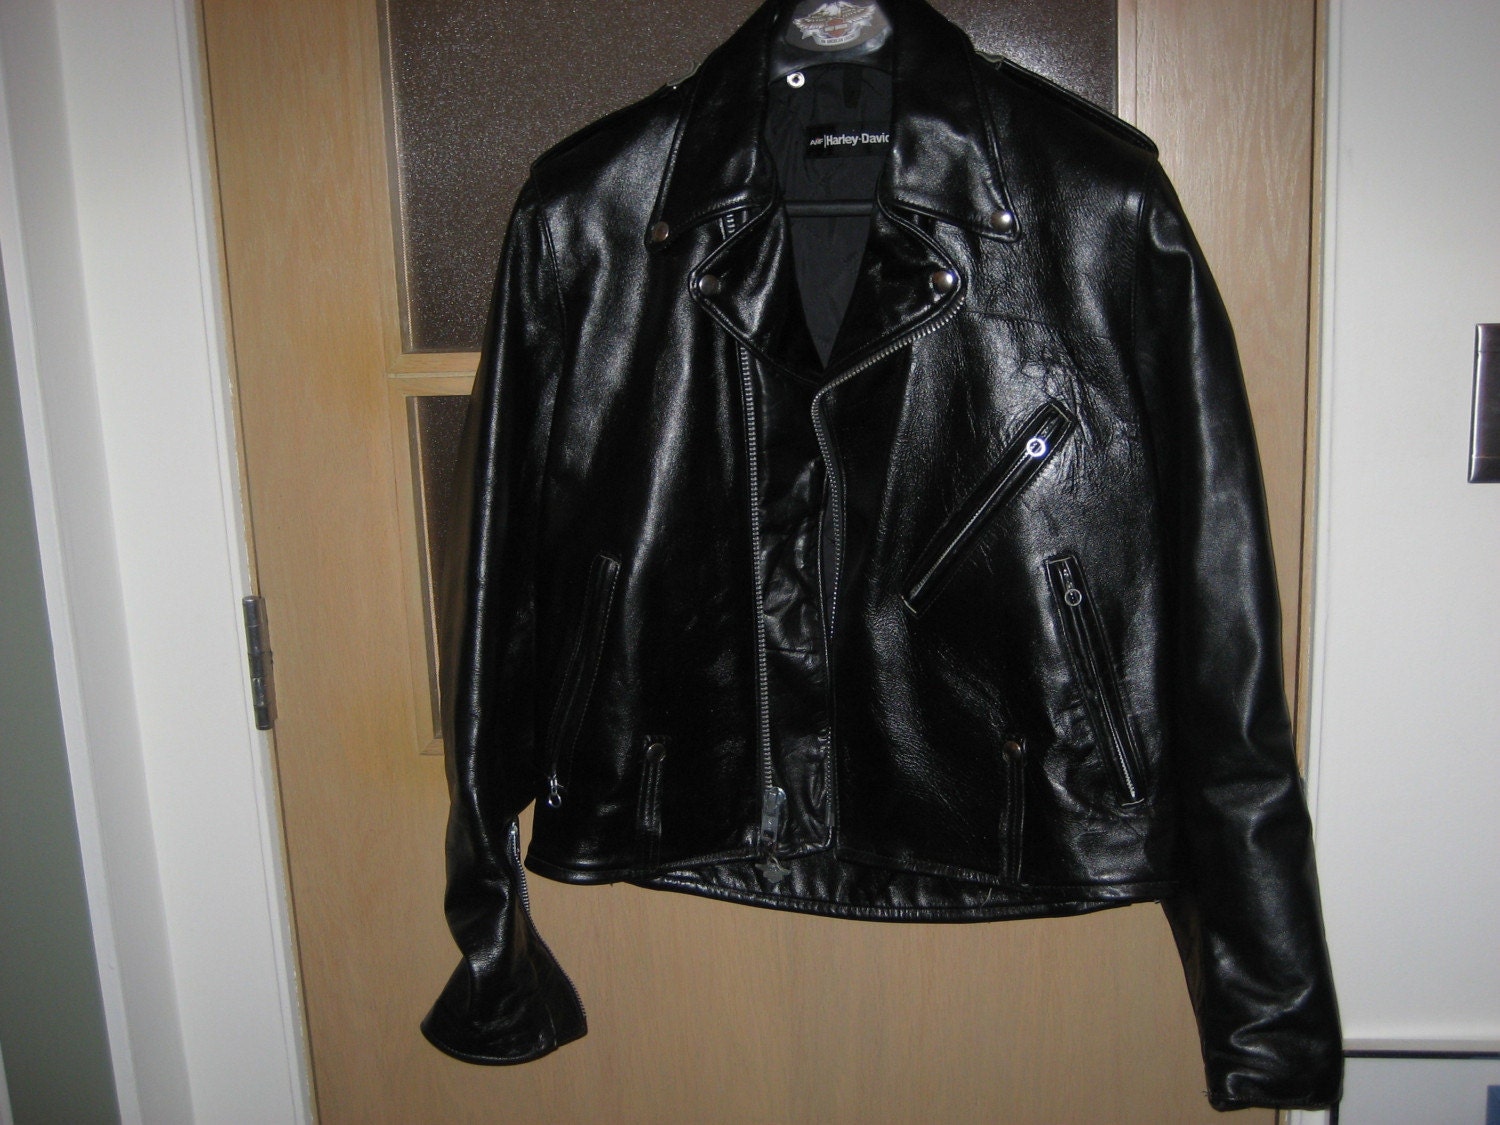  AMF Harley Davidson motorcycle leather jacket 